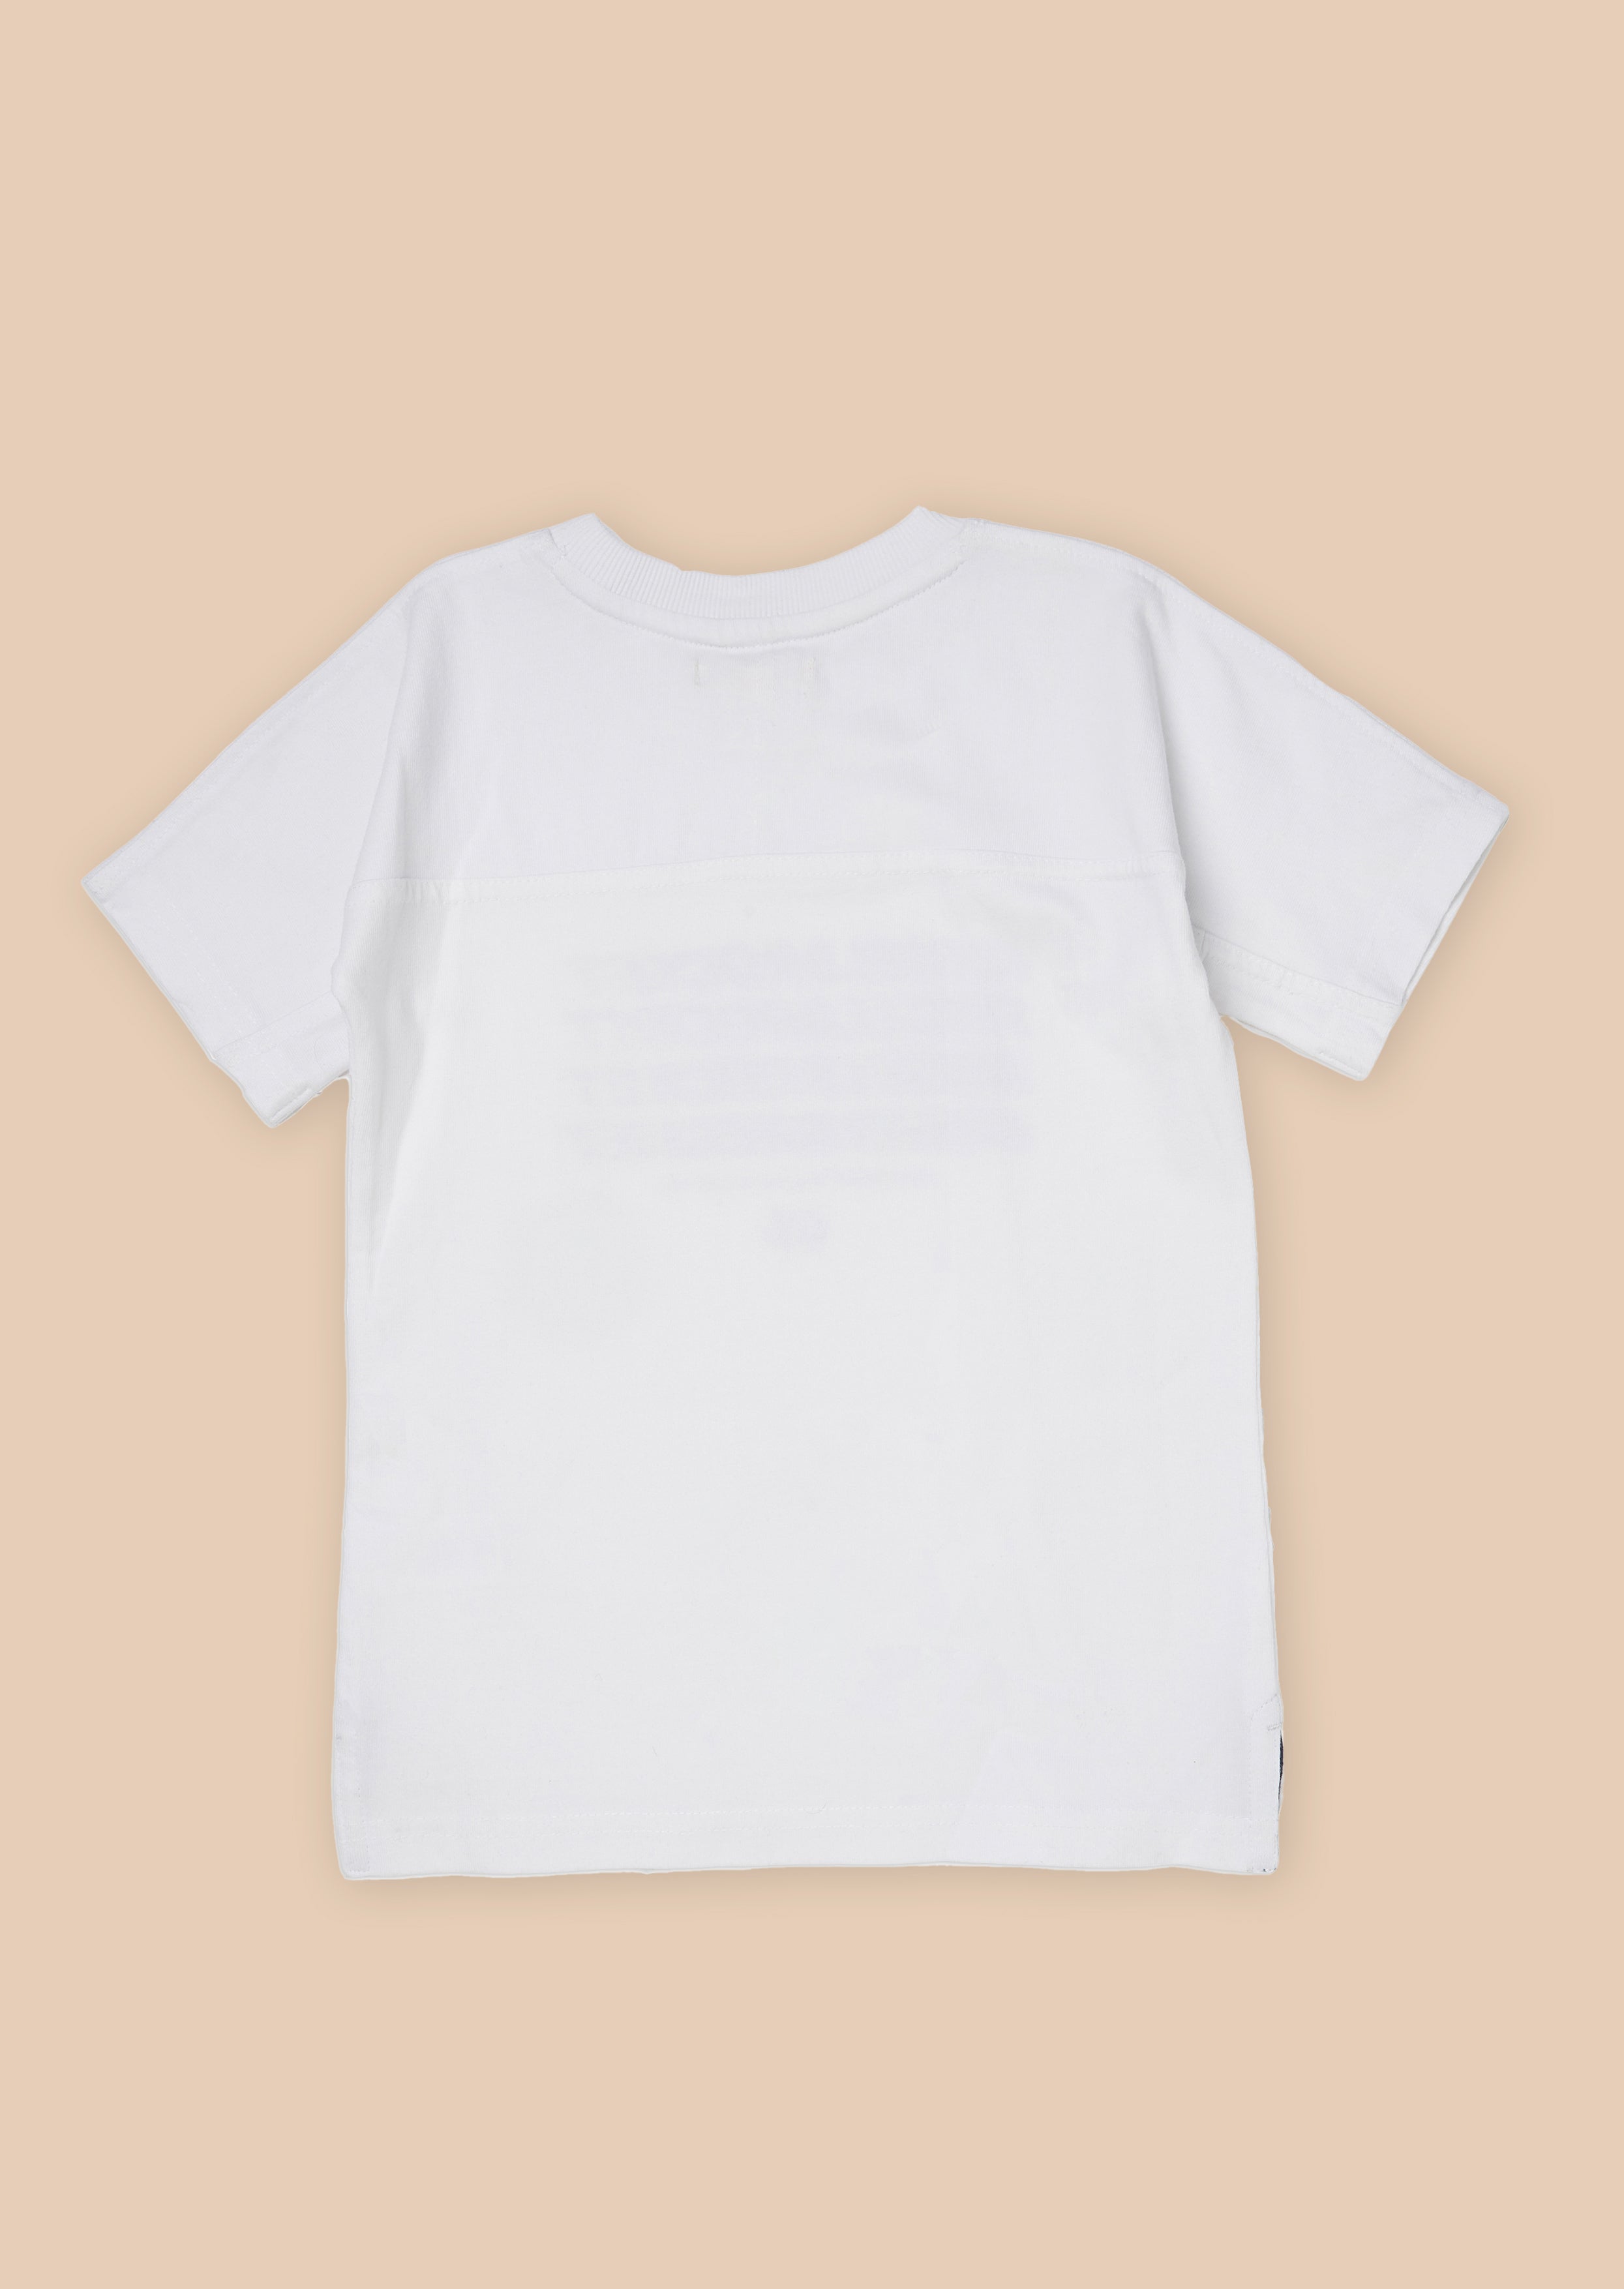 Boys Typography Printed Cotton White T-Shirt